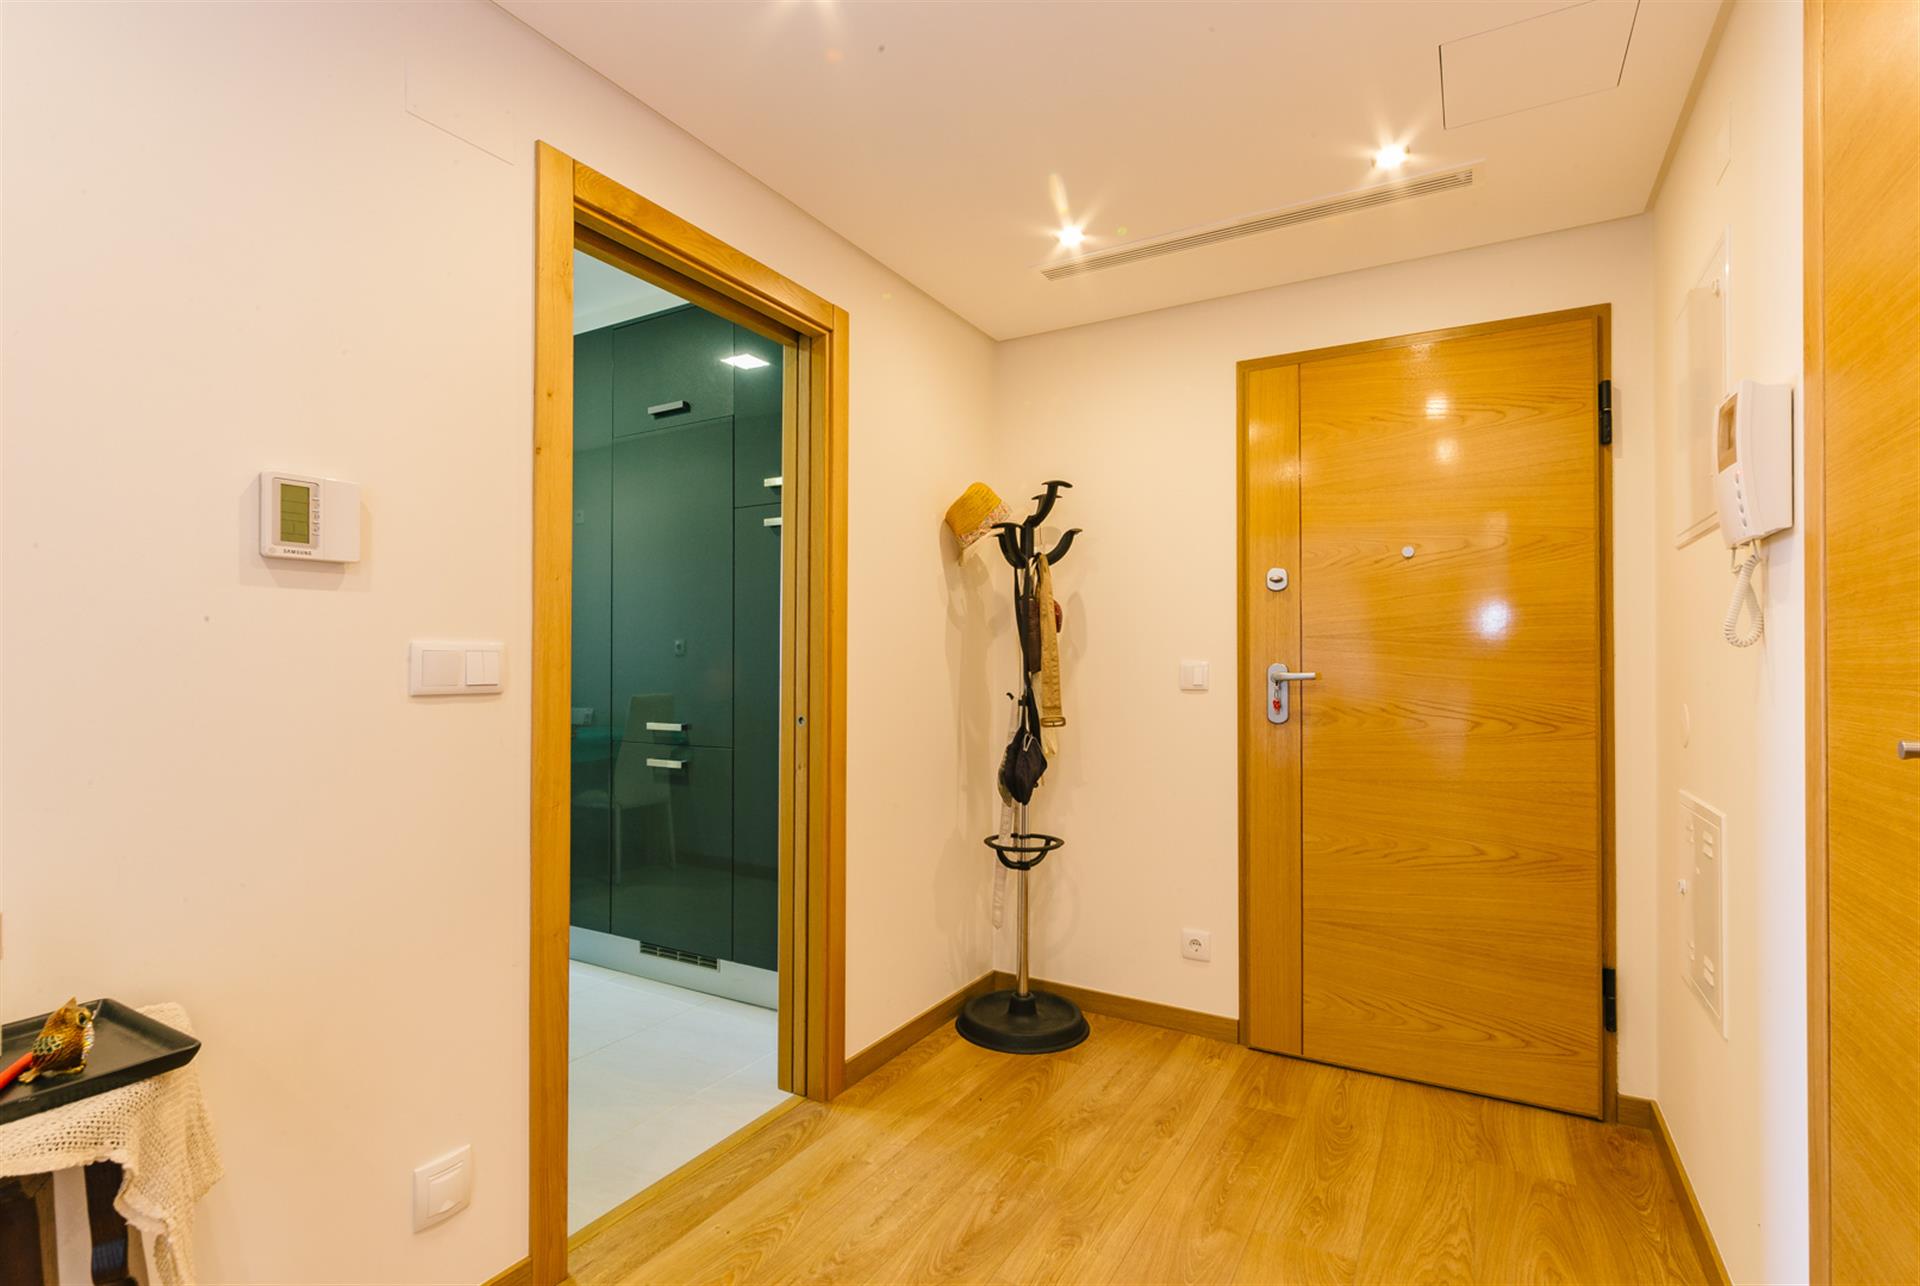 2 bedroom apartment in Estoril - comfort, space and open views 